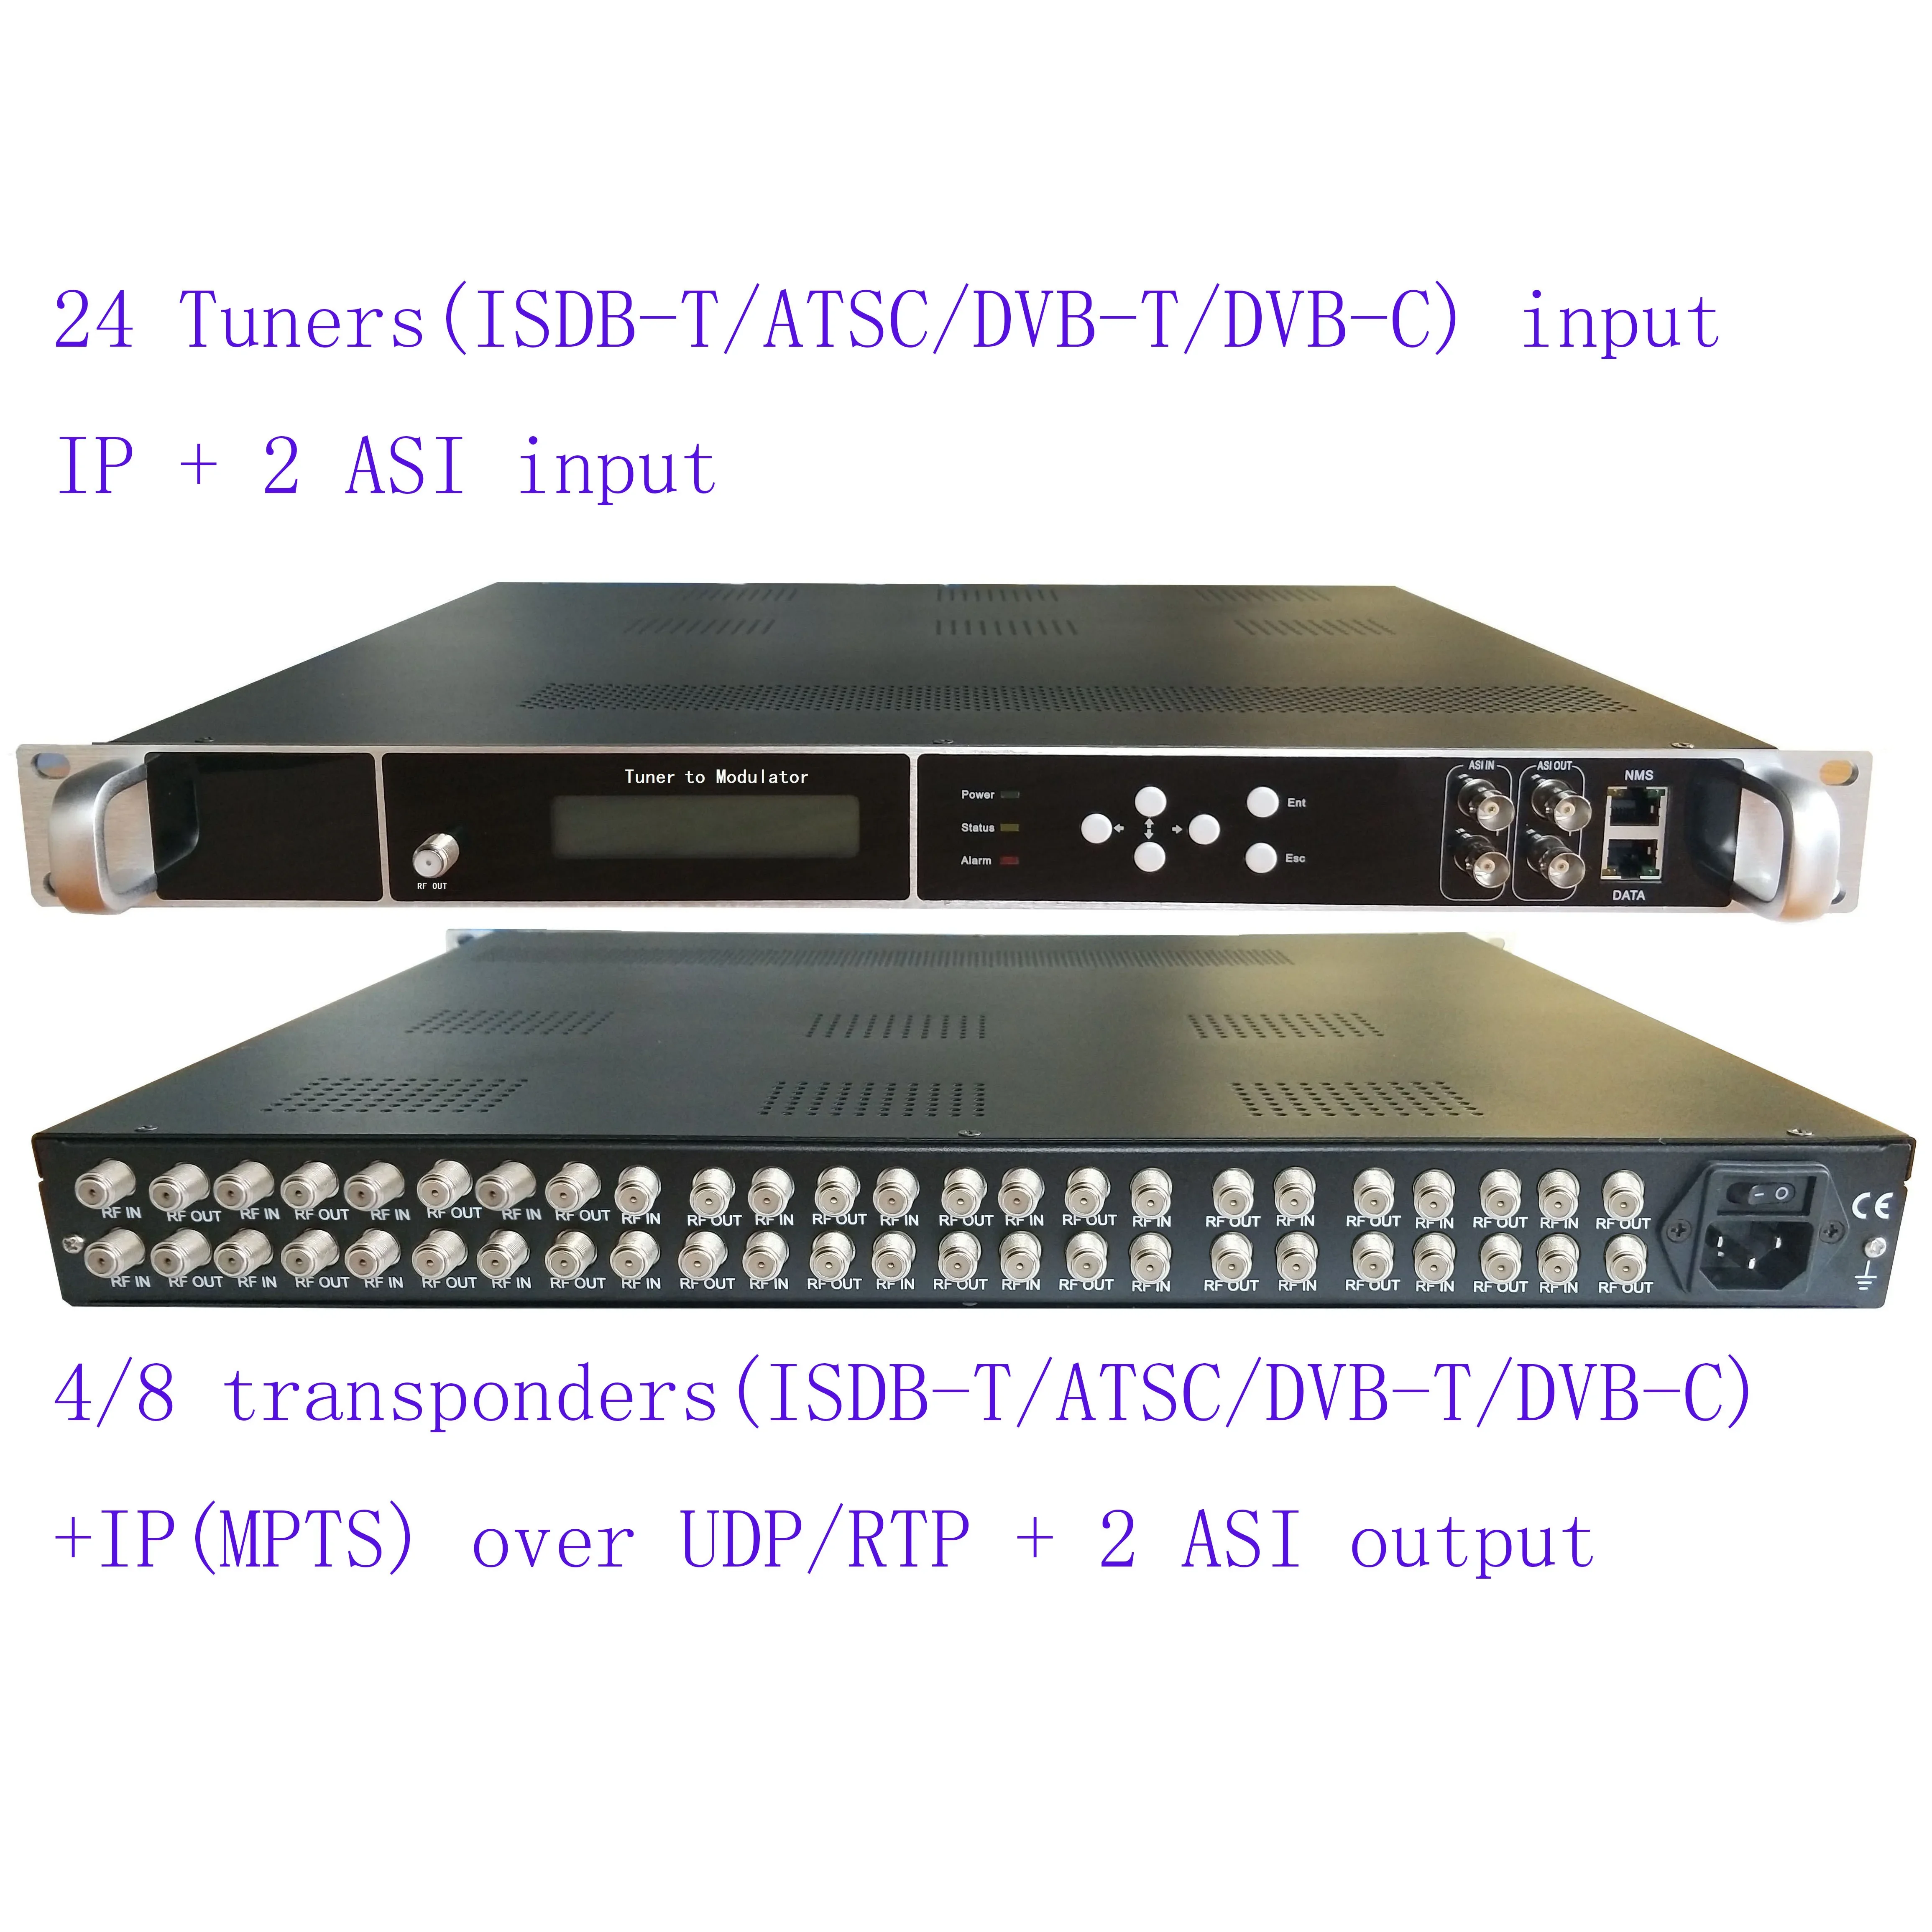 

24 way dvb-s2/S to DVB-T digital catv modulator, 24 way DVB-T tuner to DVB-T RF modulator, TV headend for hotel/school/hospital